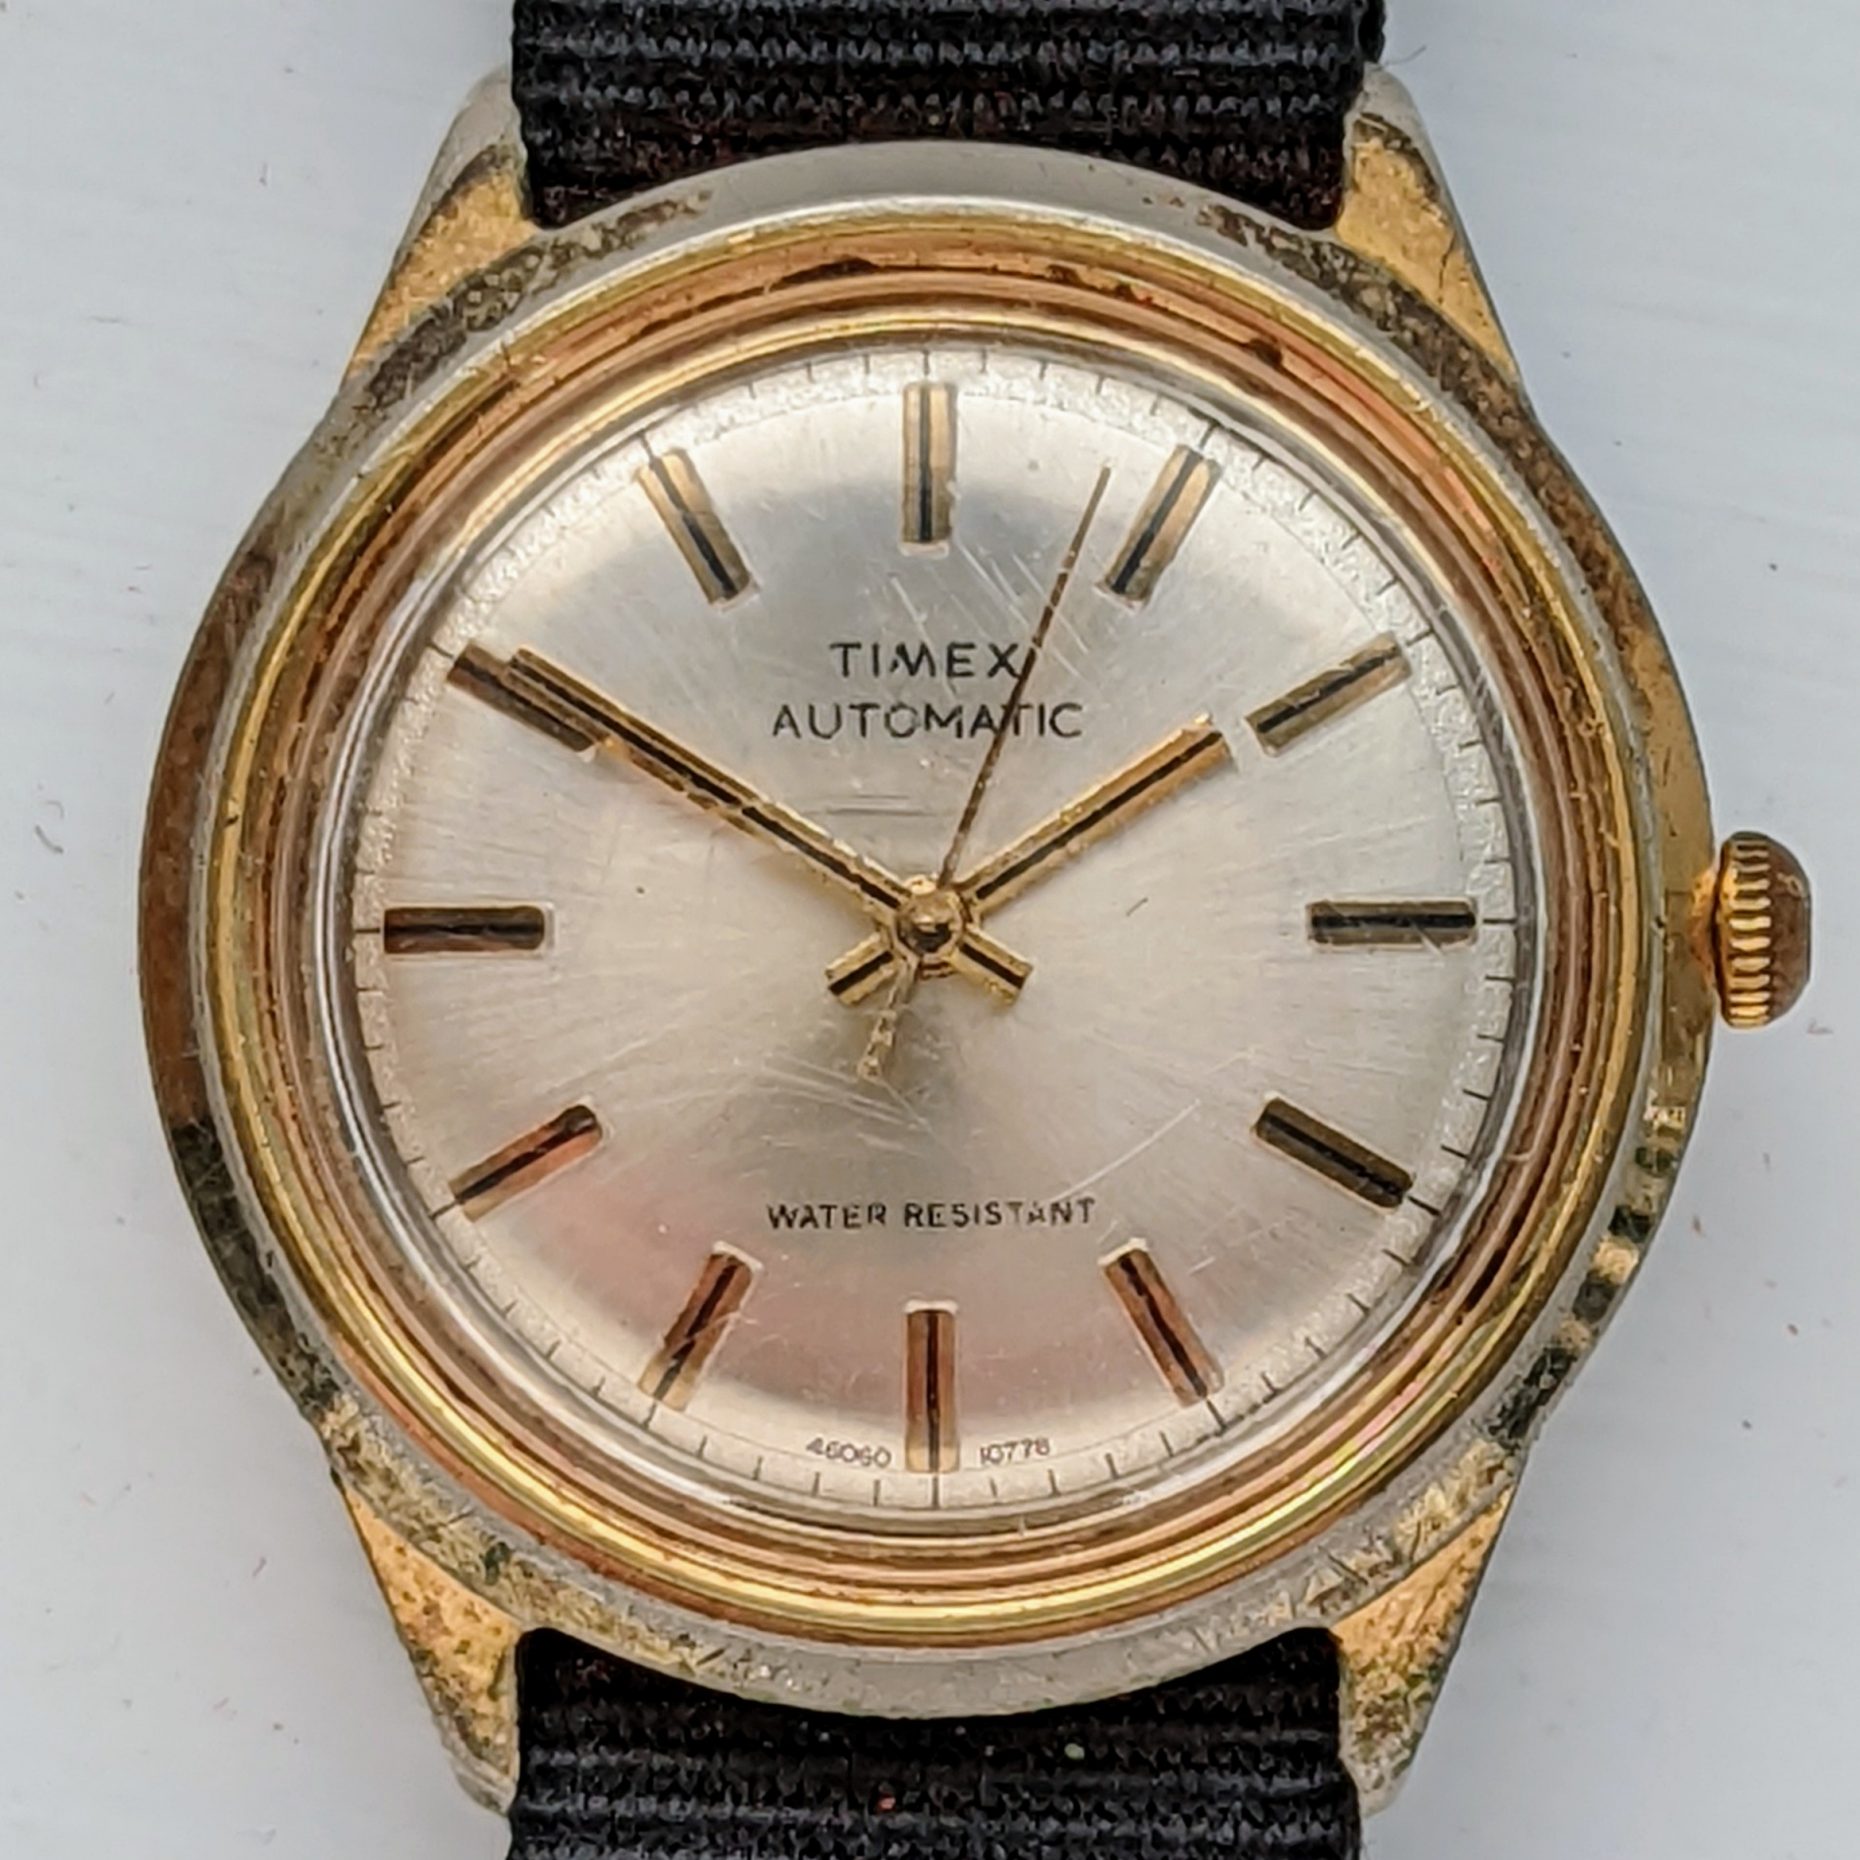 Timex Viscount 46060 10778 [1978]